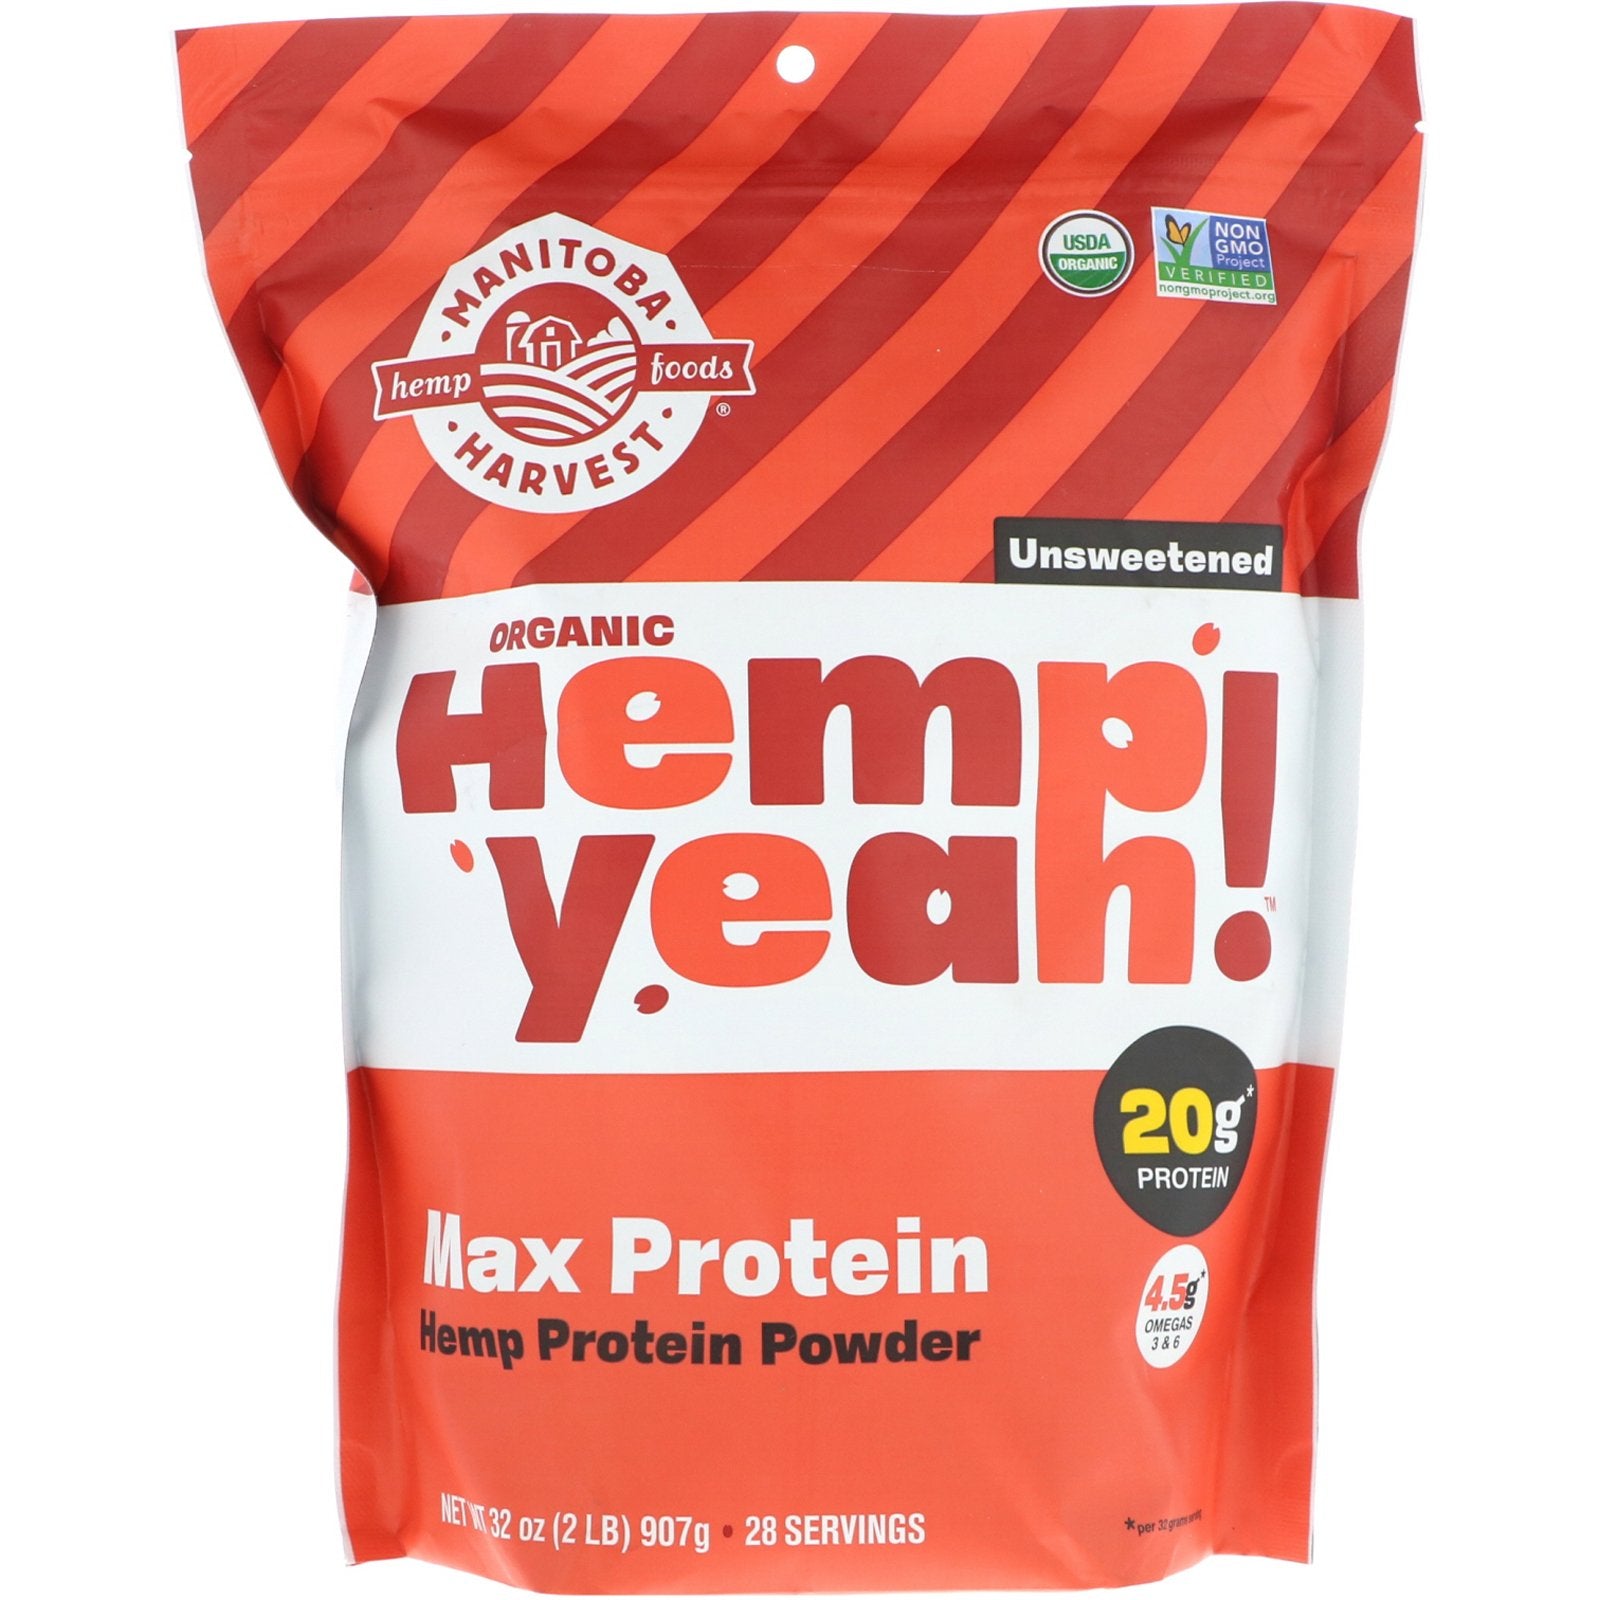 Manitoba Harvest Hemp Yeah Max Protein Organic